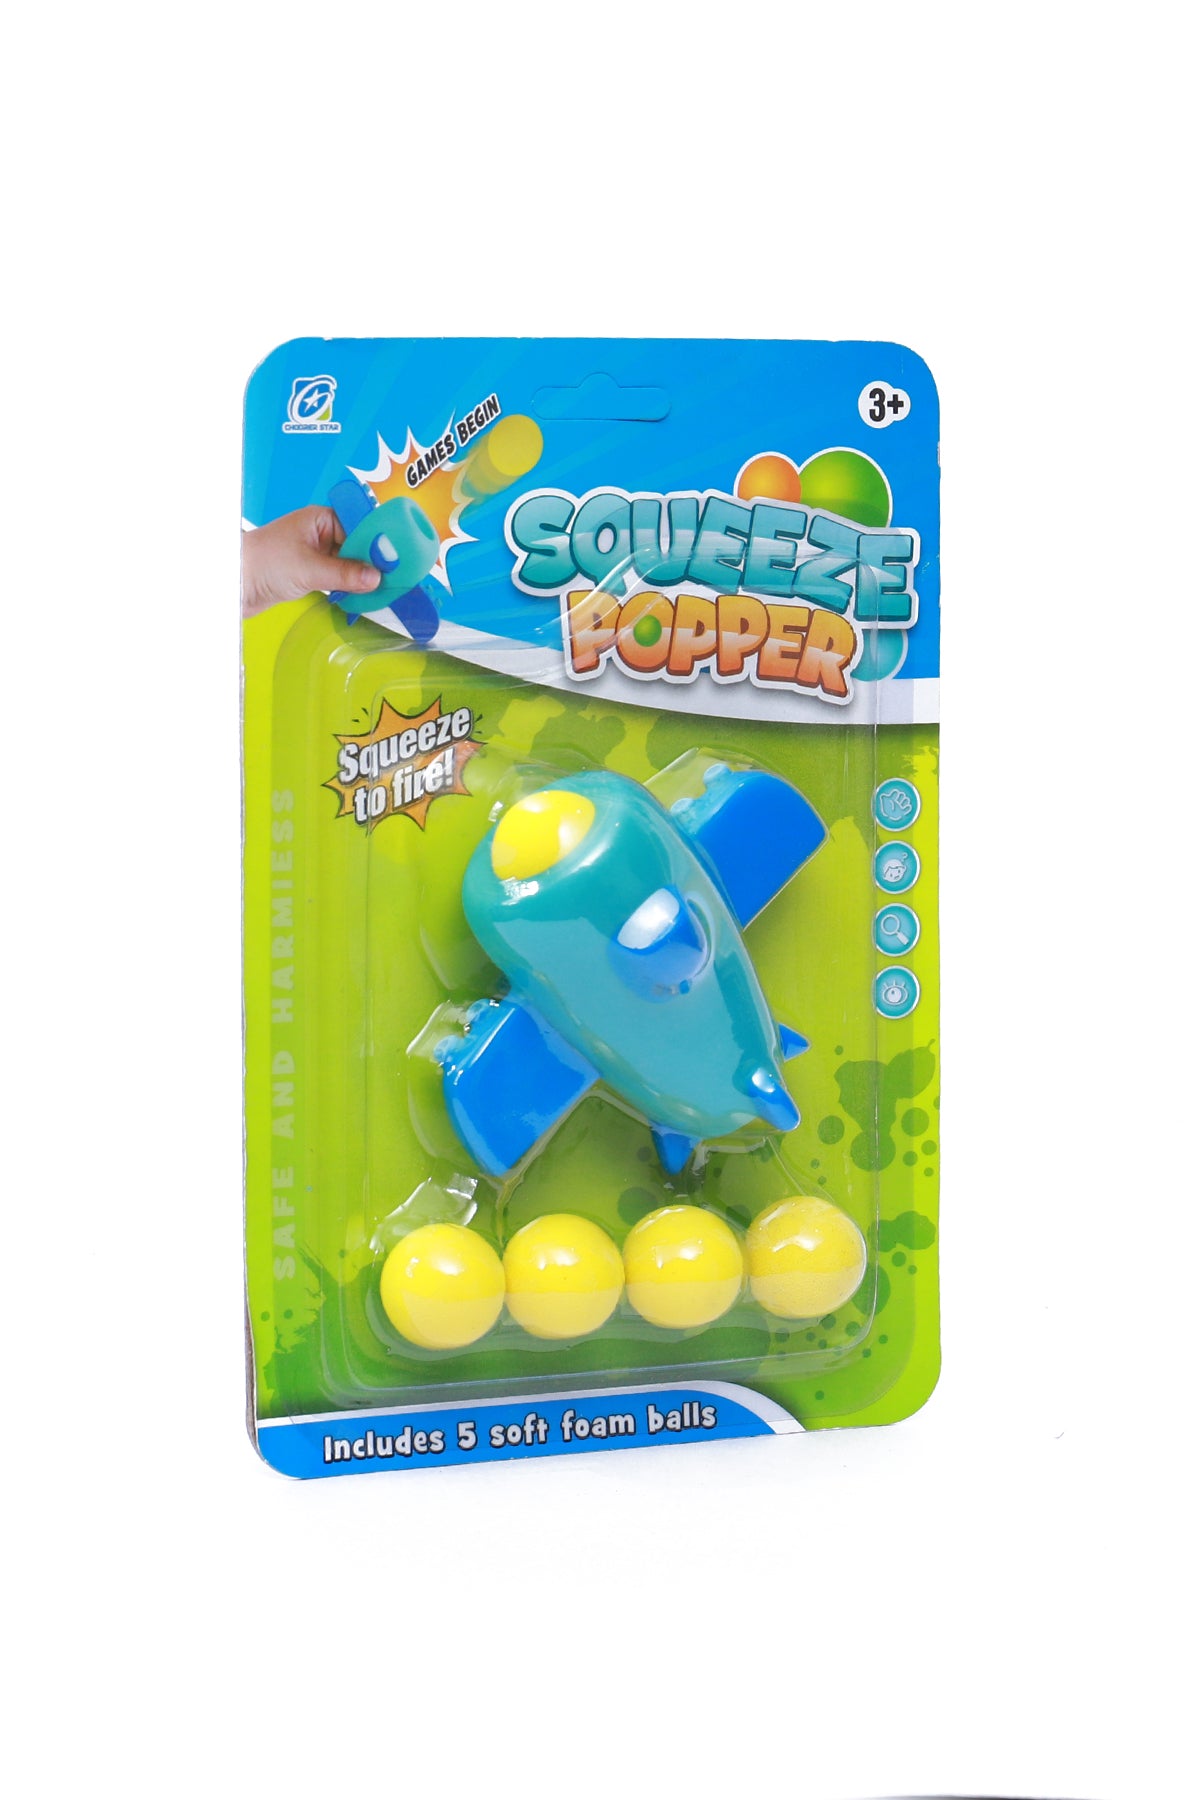 Squeeze Power Gun For Kids